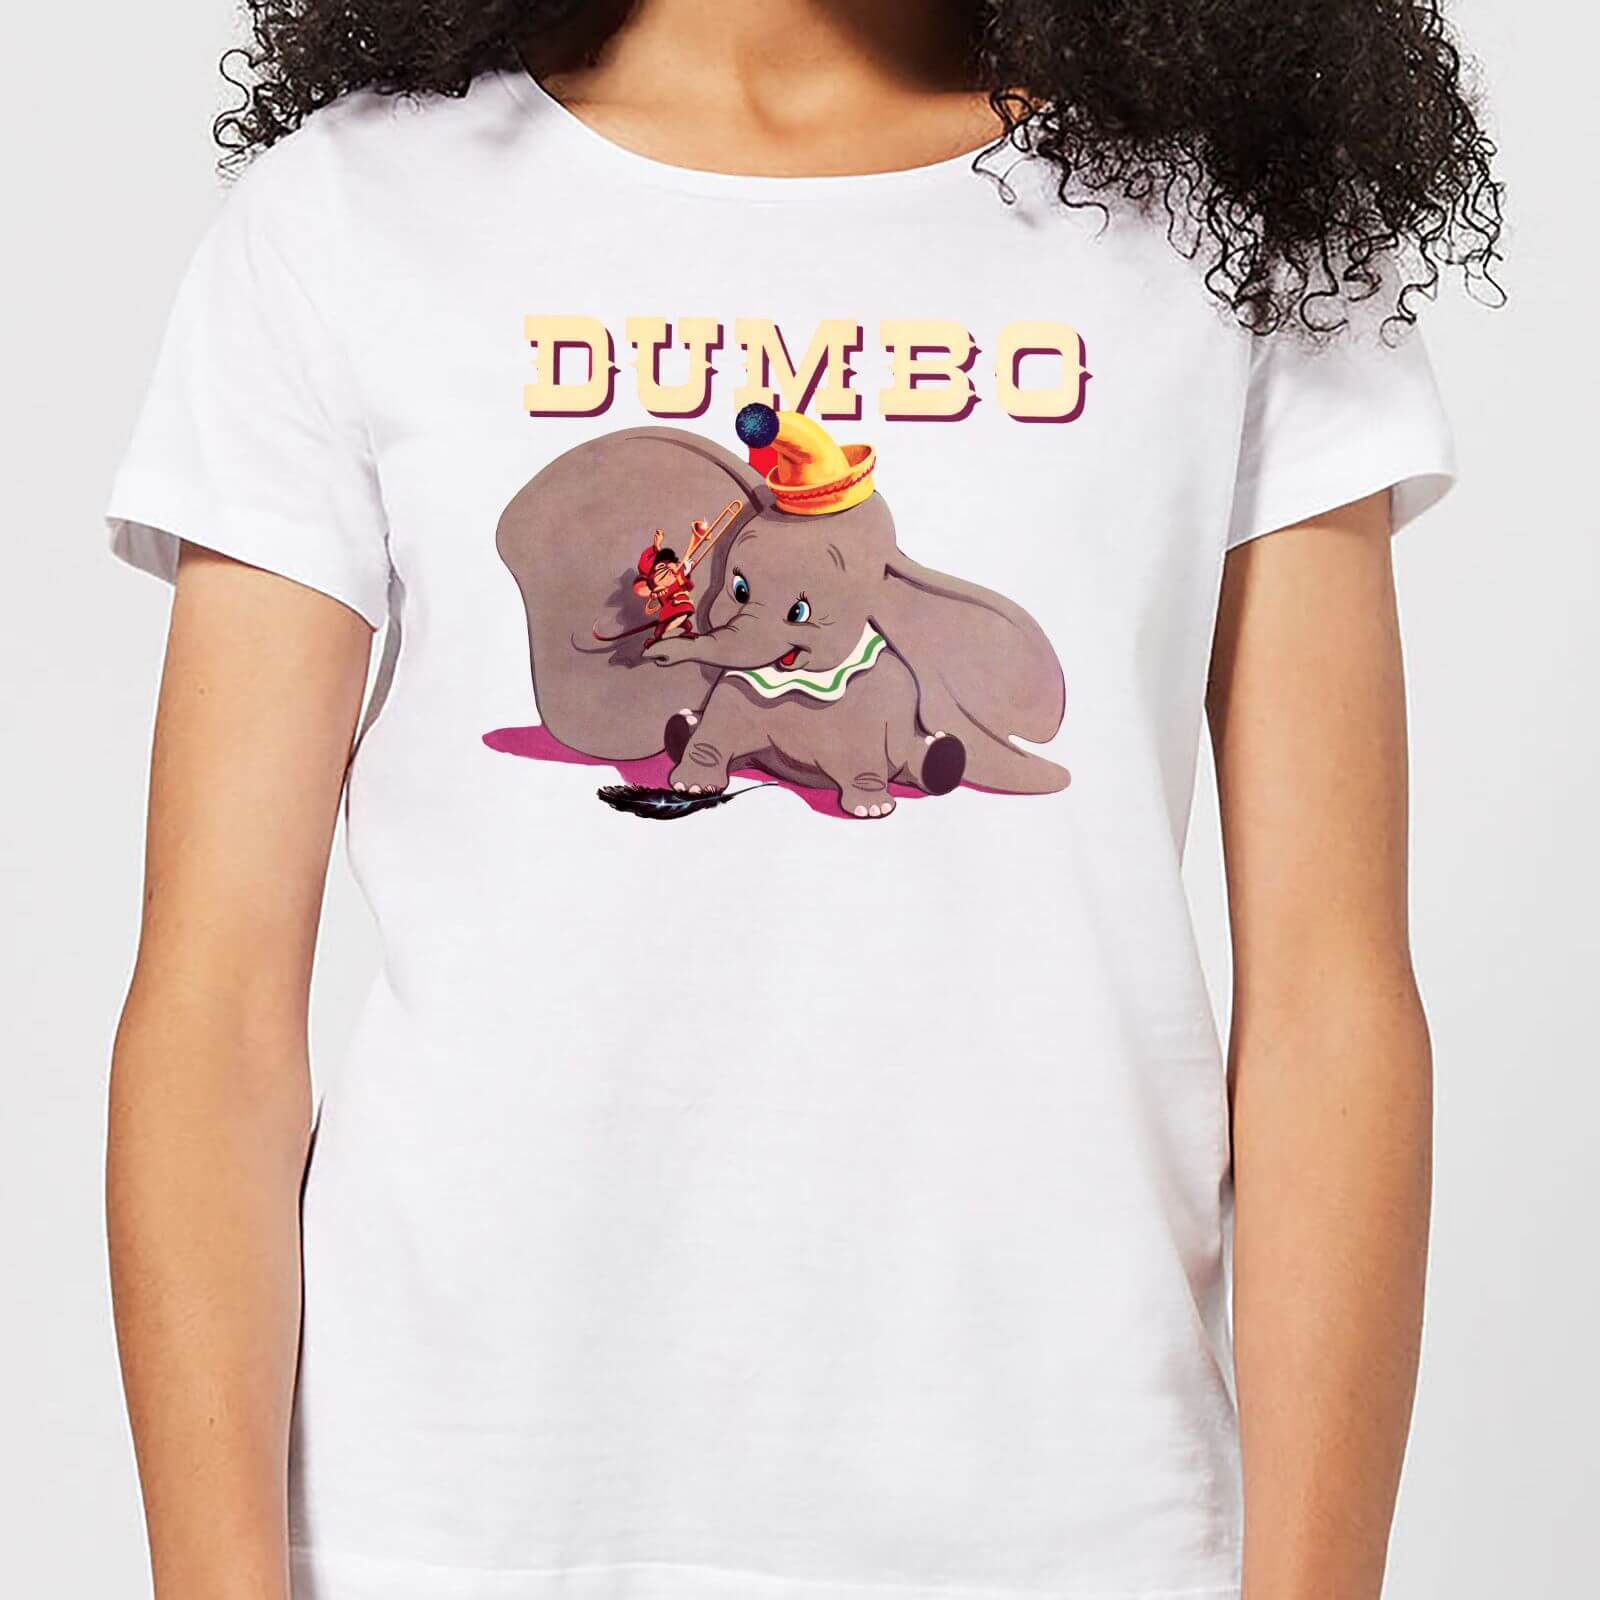 Dumbo Timothy's Trombone Women's T-Shirt - White - L - White